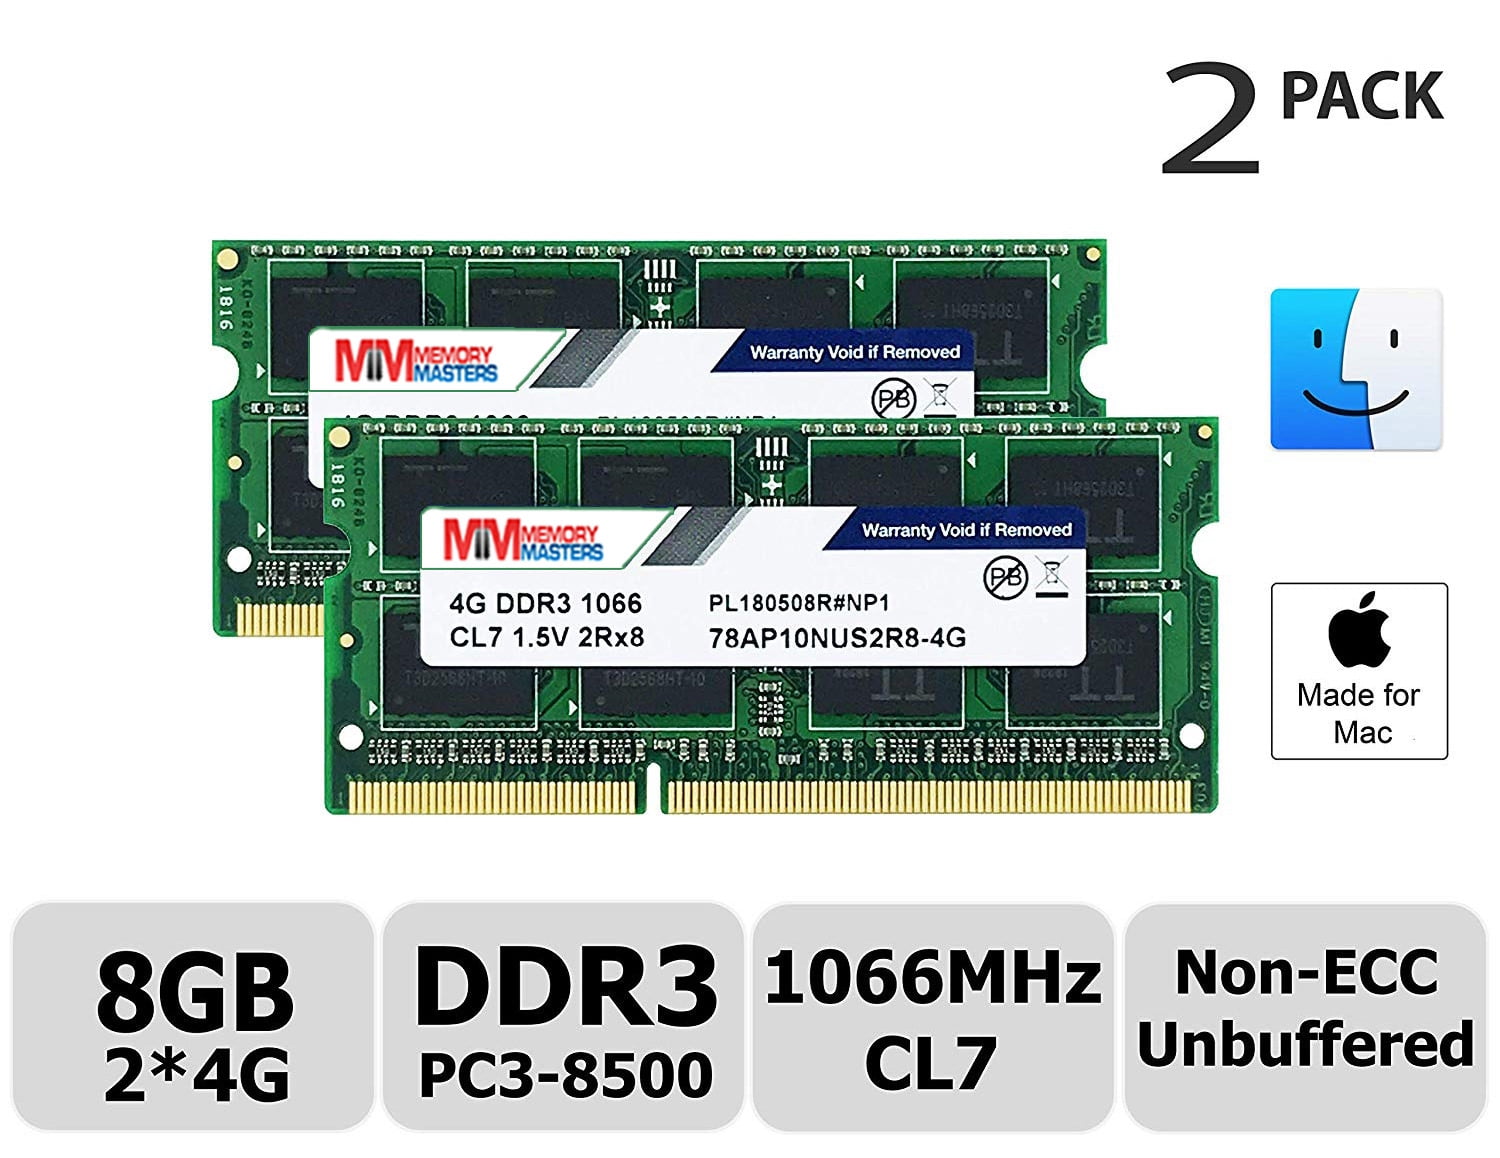 2x4GB DDR3 1333MHz PC3-10600 SODIMM Memory Upgrade For MacBook Pro/iMac/Mac mini Timetec Hynix IC compatible with Apple 8GB Kit